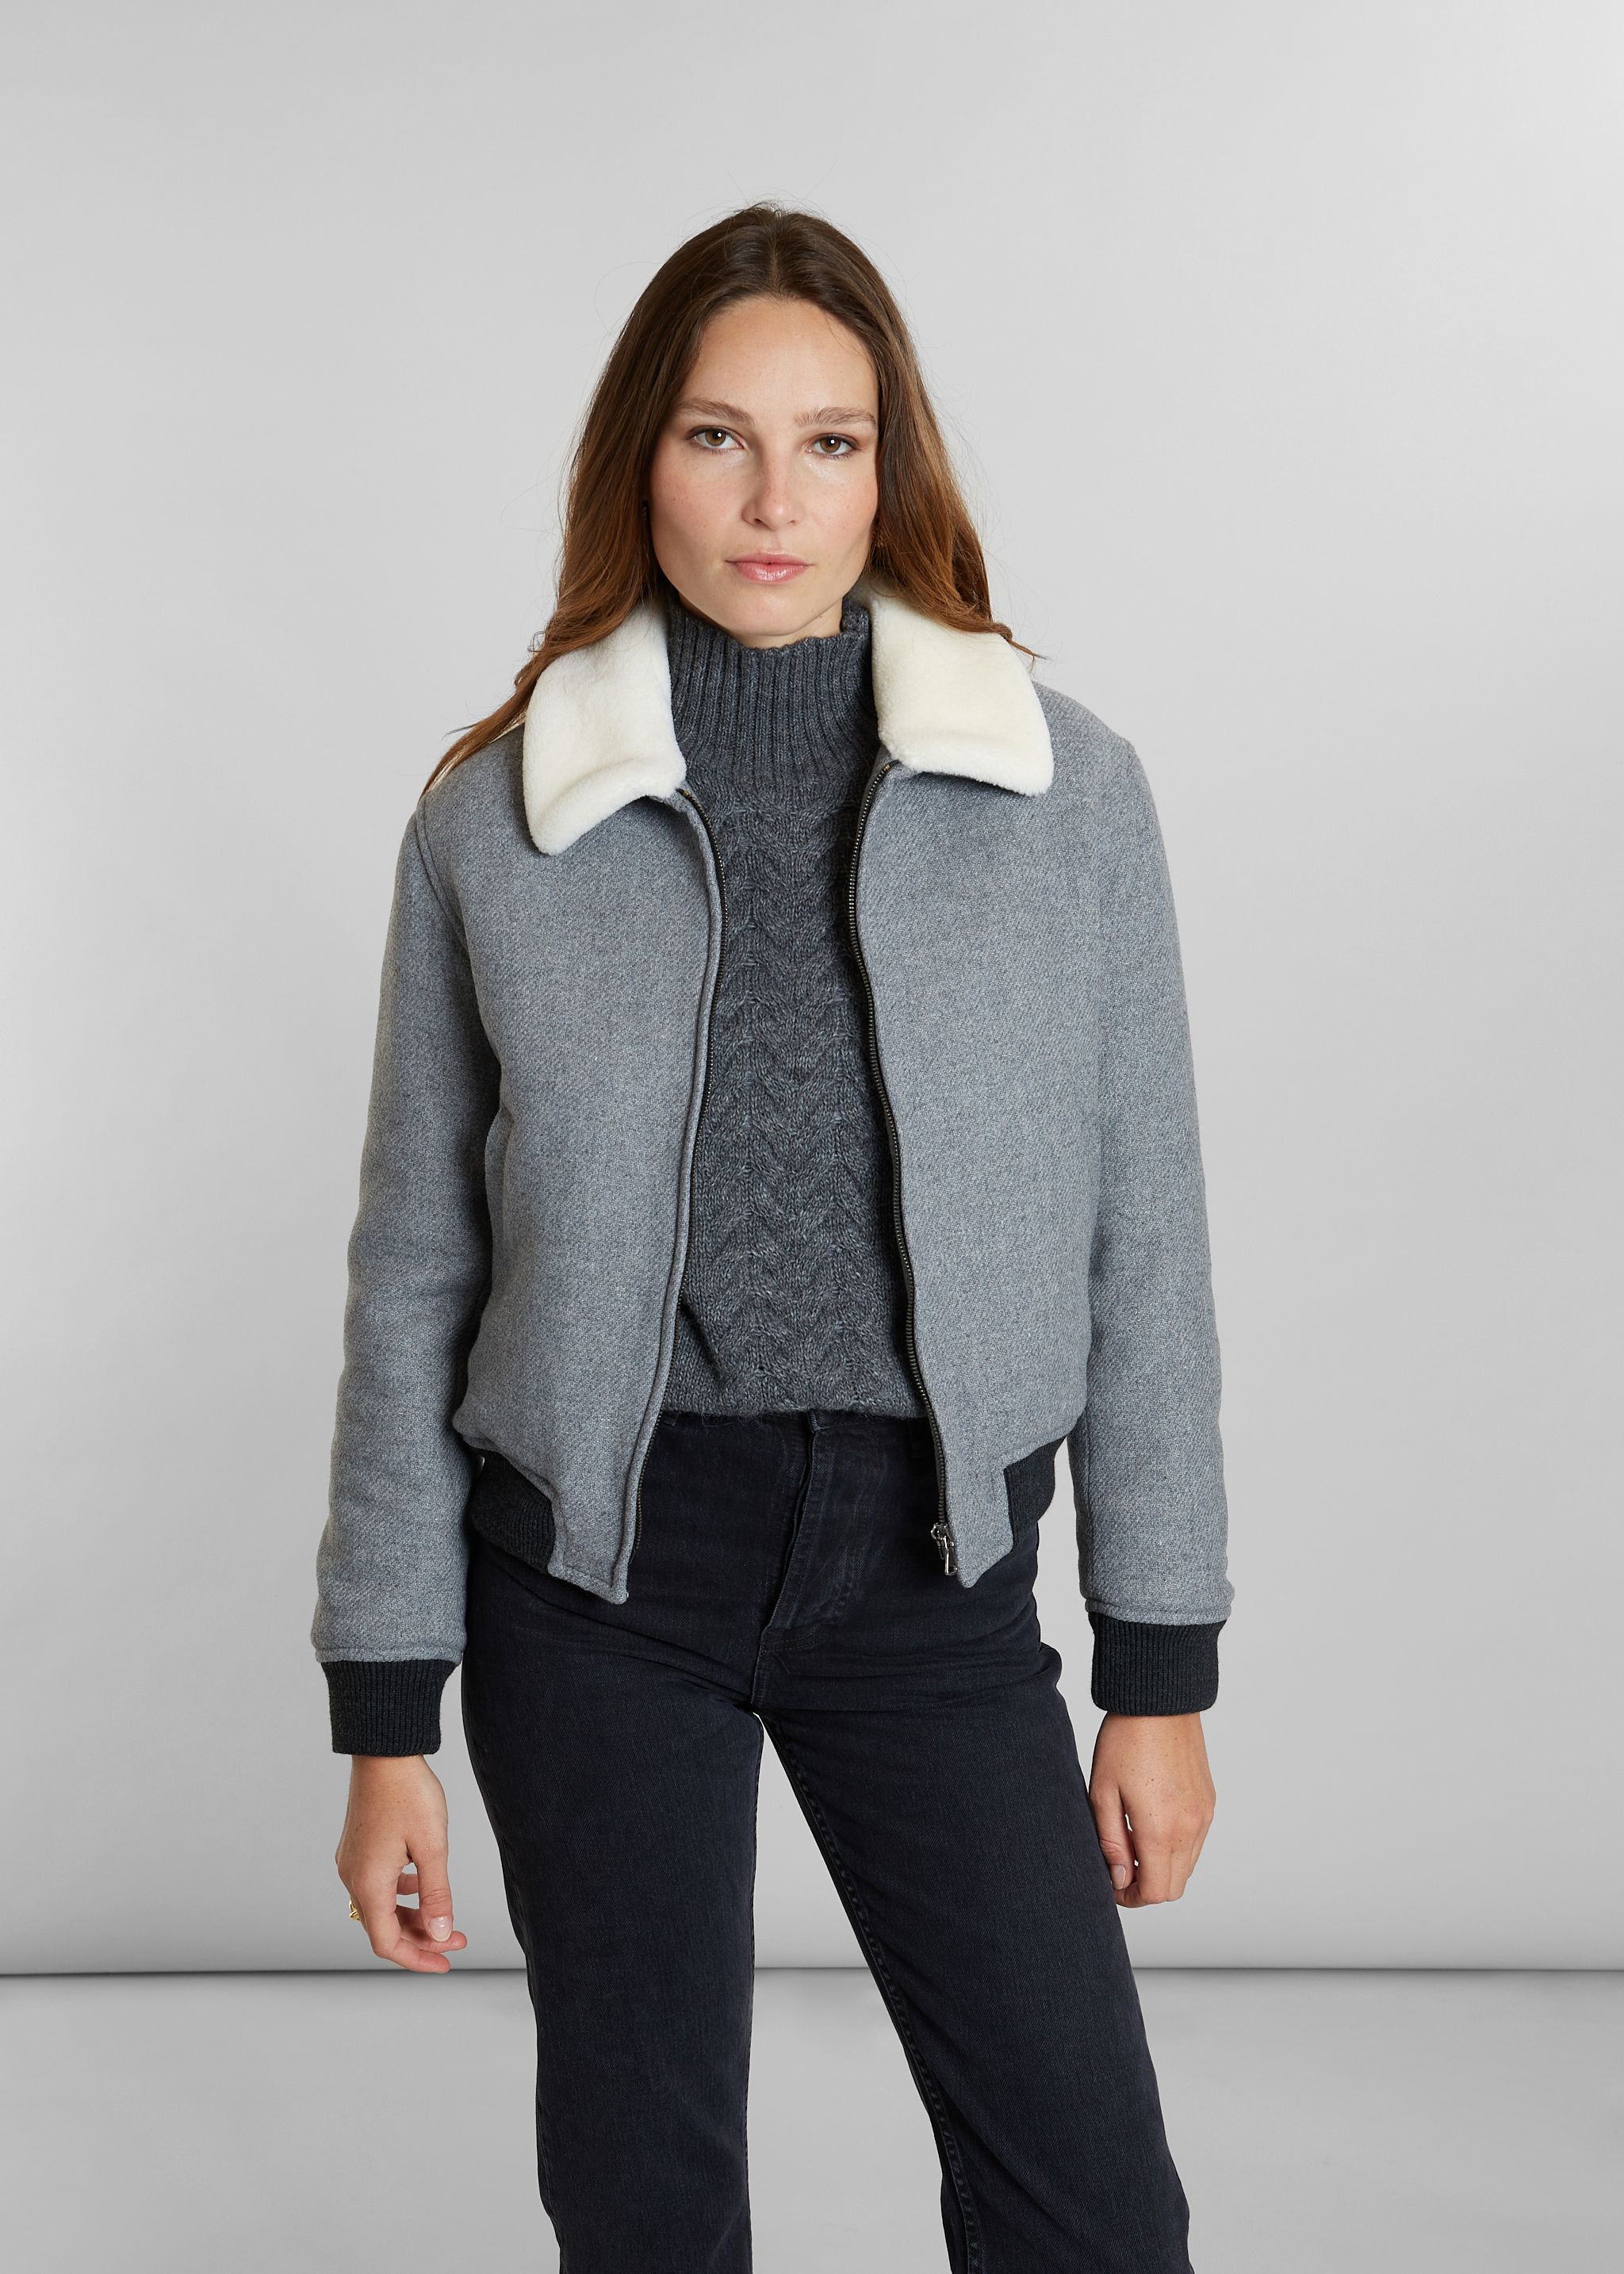 Wool aviator jacket, ecru collar - L'Exception Paris